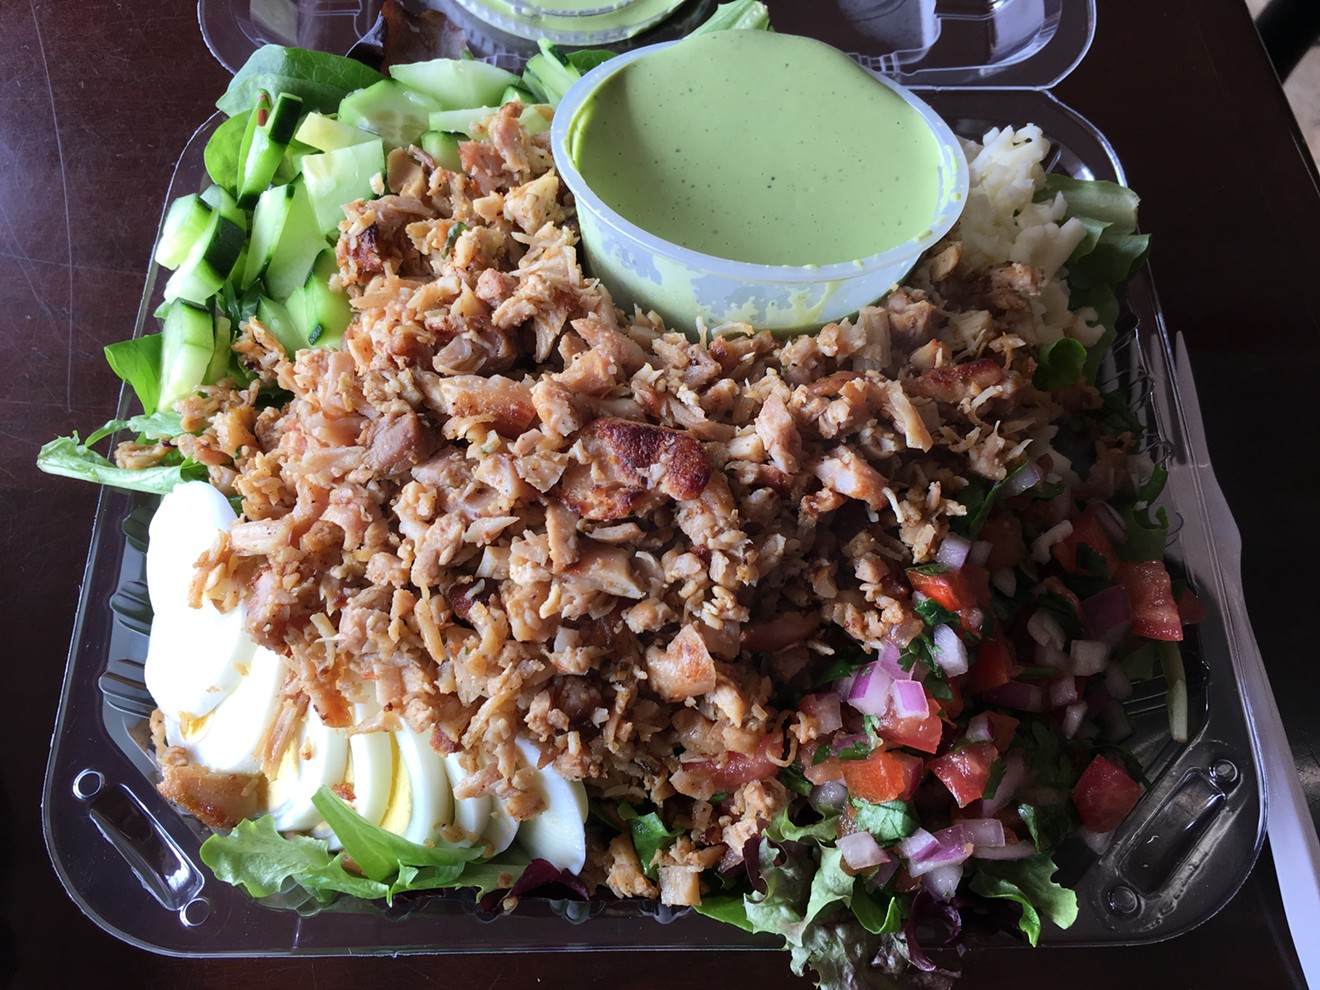 A chopped chicken salad is Cobb via Sinaloa.